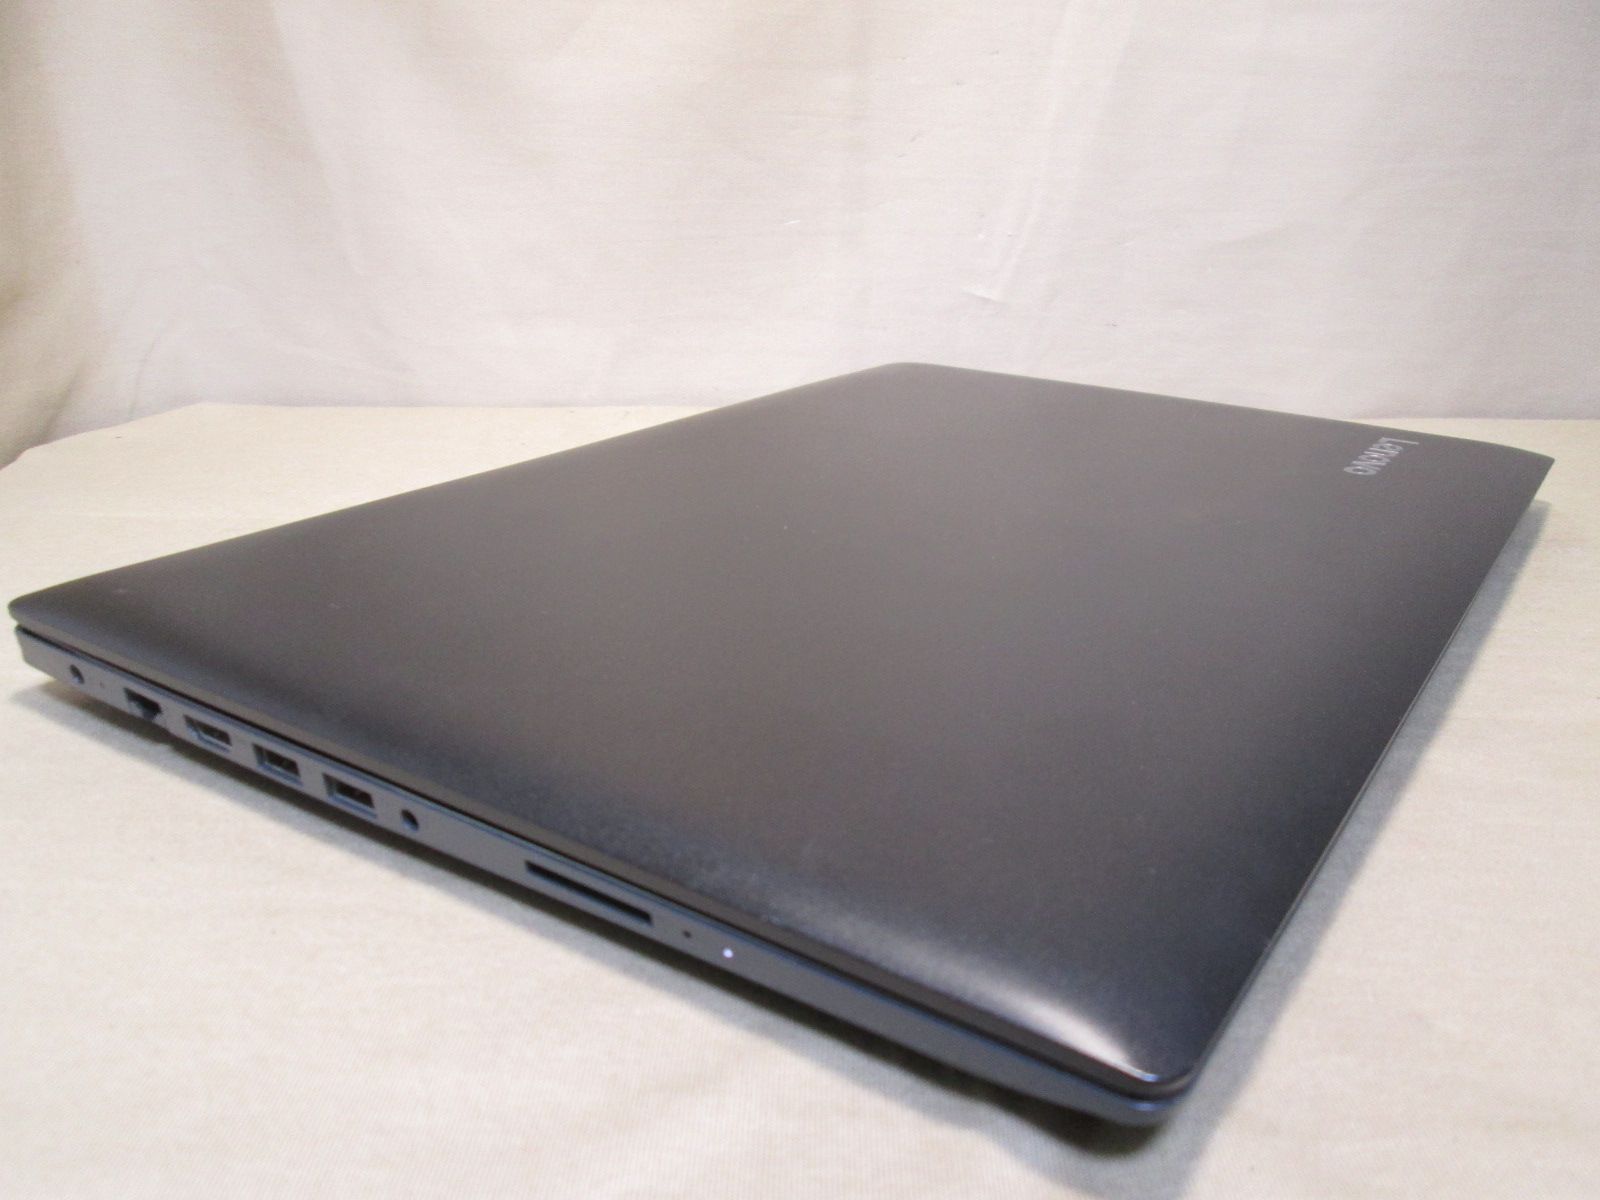 Lenovo IdeaPad 330 81D600JAJP【大容量HDD搭載】 AMD A9-9425 3.1GHz ...